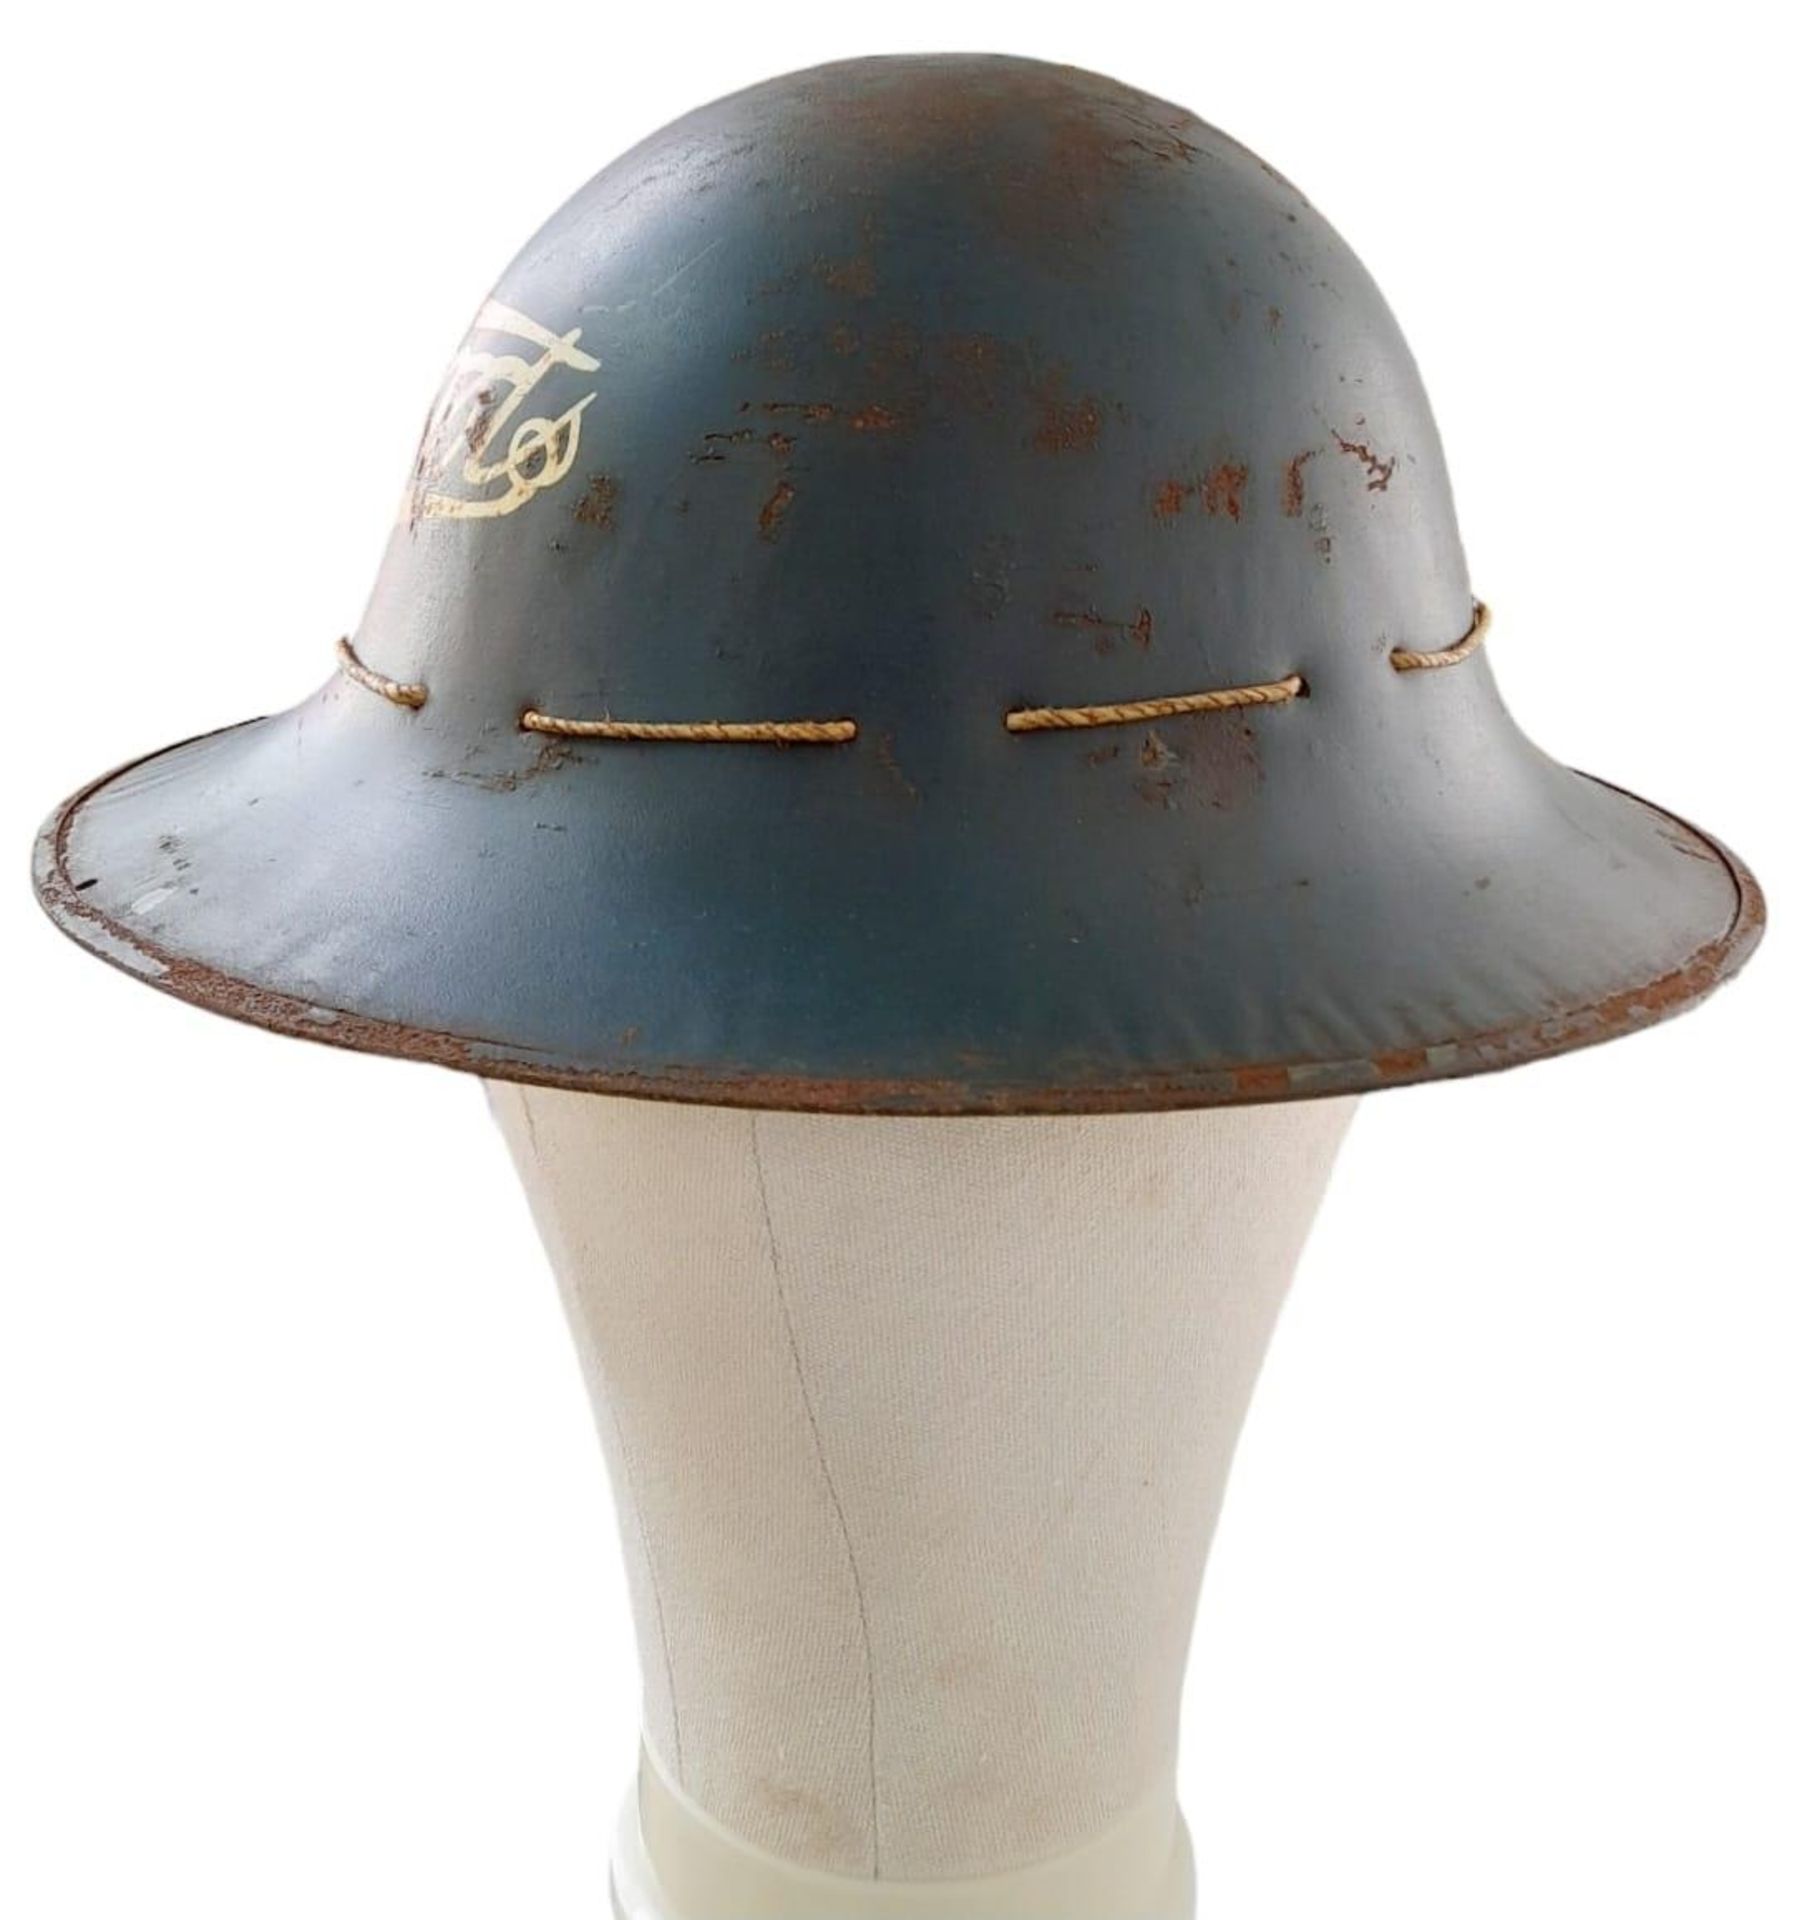 WW2 British Homefront. Boots The Chemist Zuckerman Helmet. Dated 1941. - Image 2 of 6